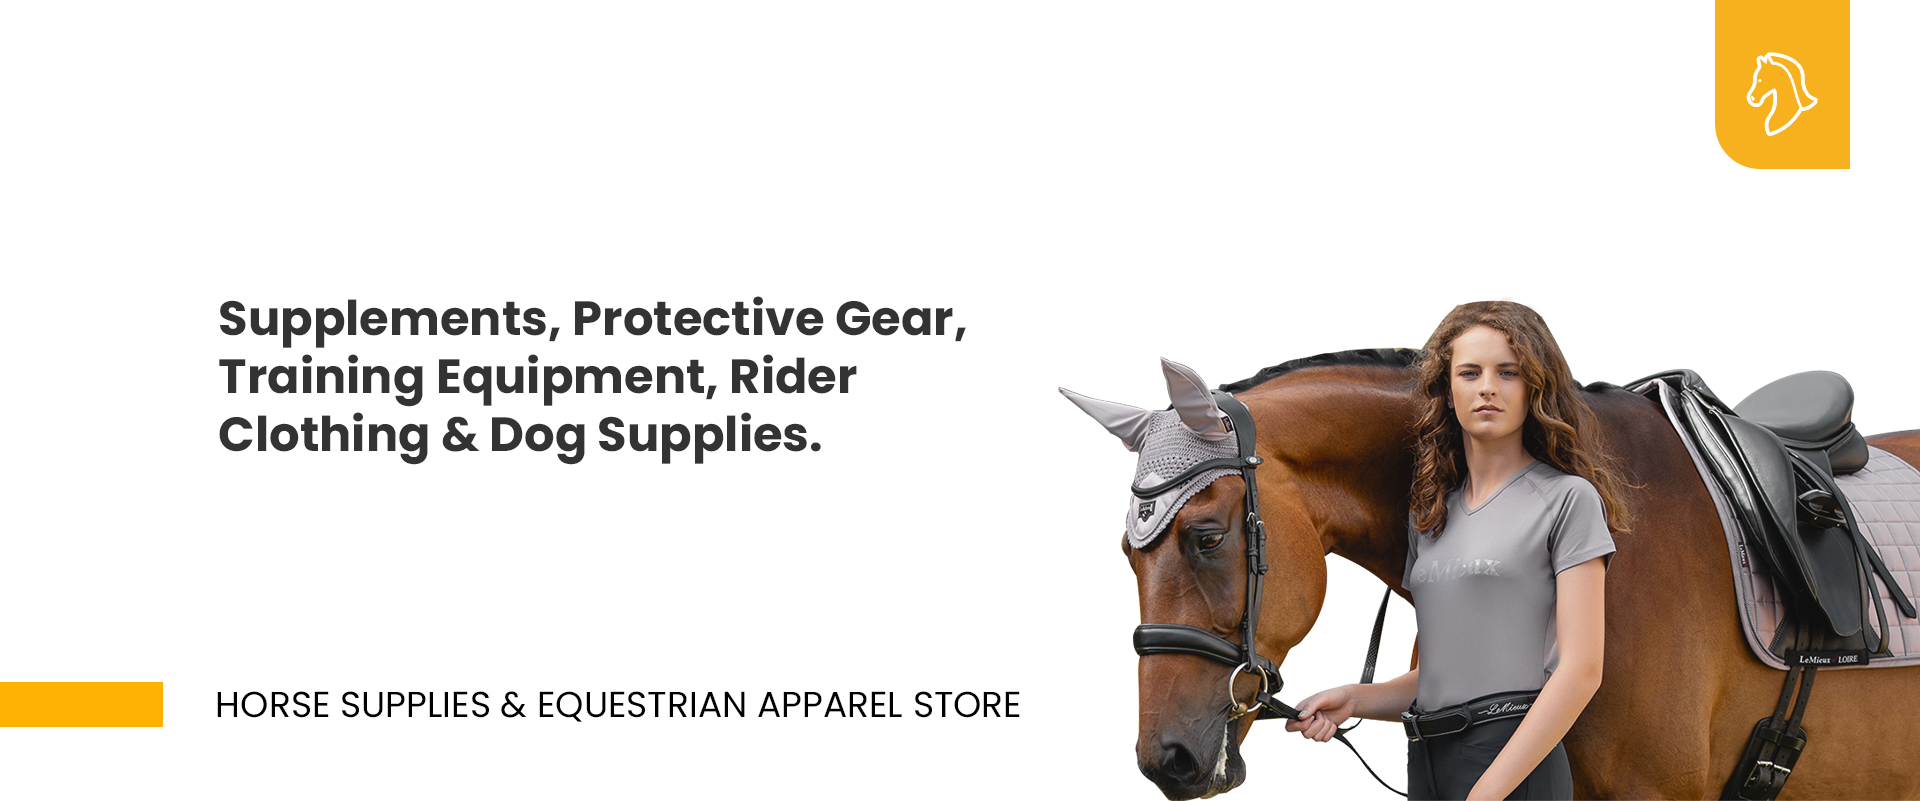 Horse Supplies & Equestrian Apparel Store